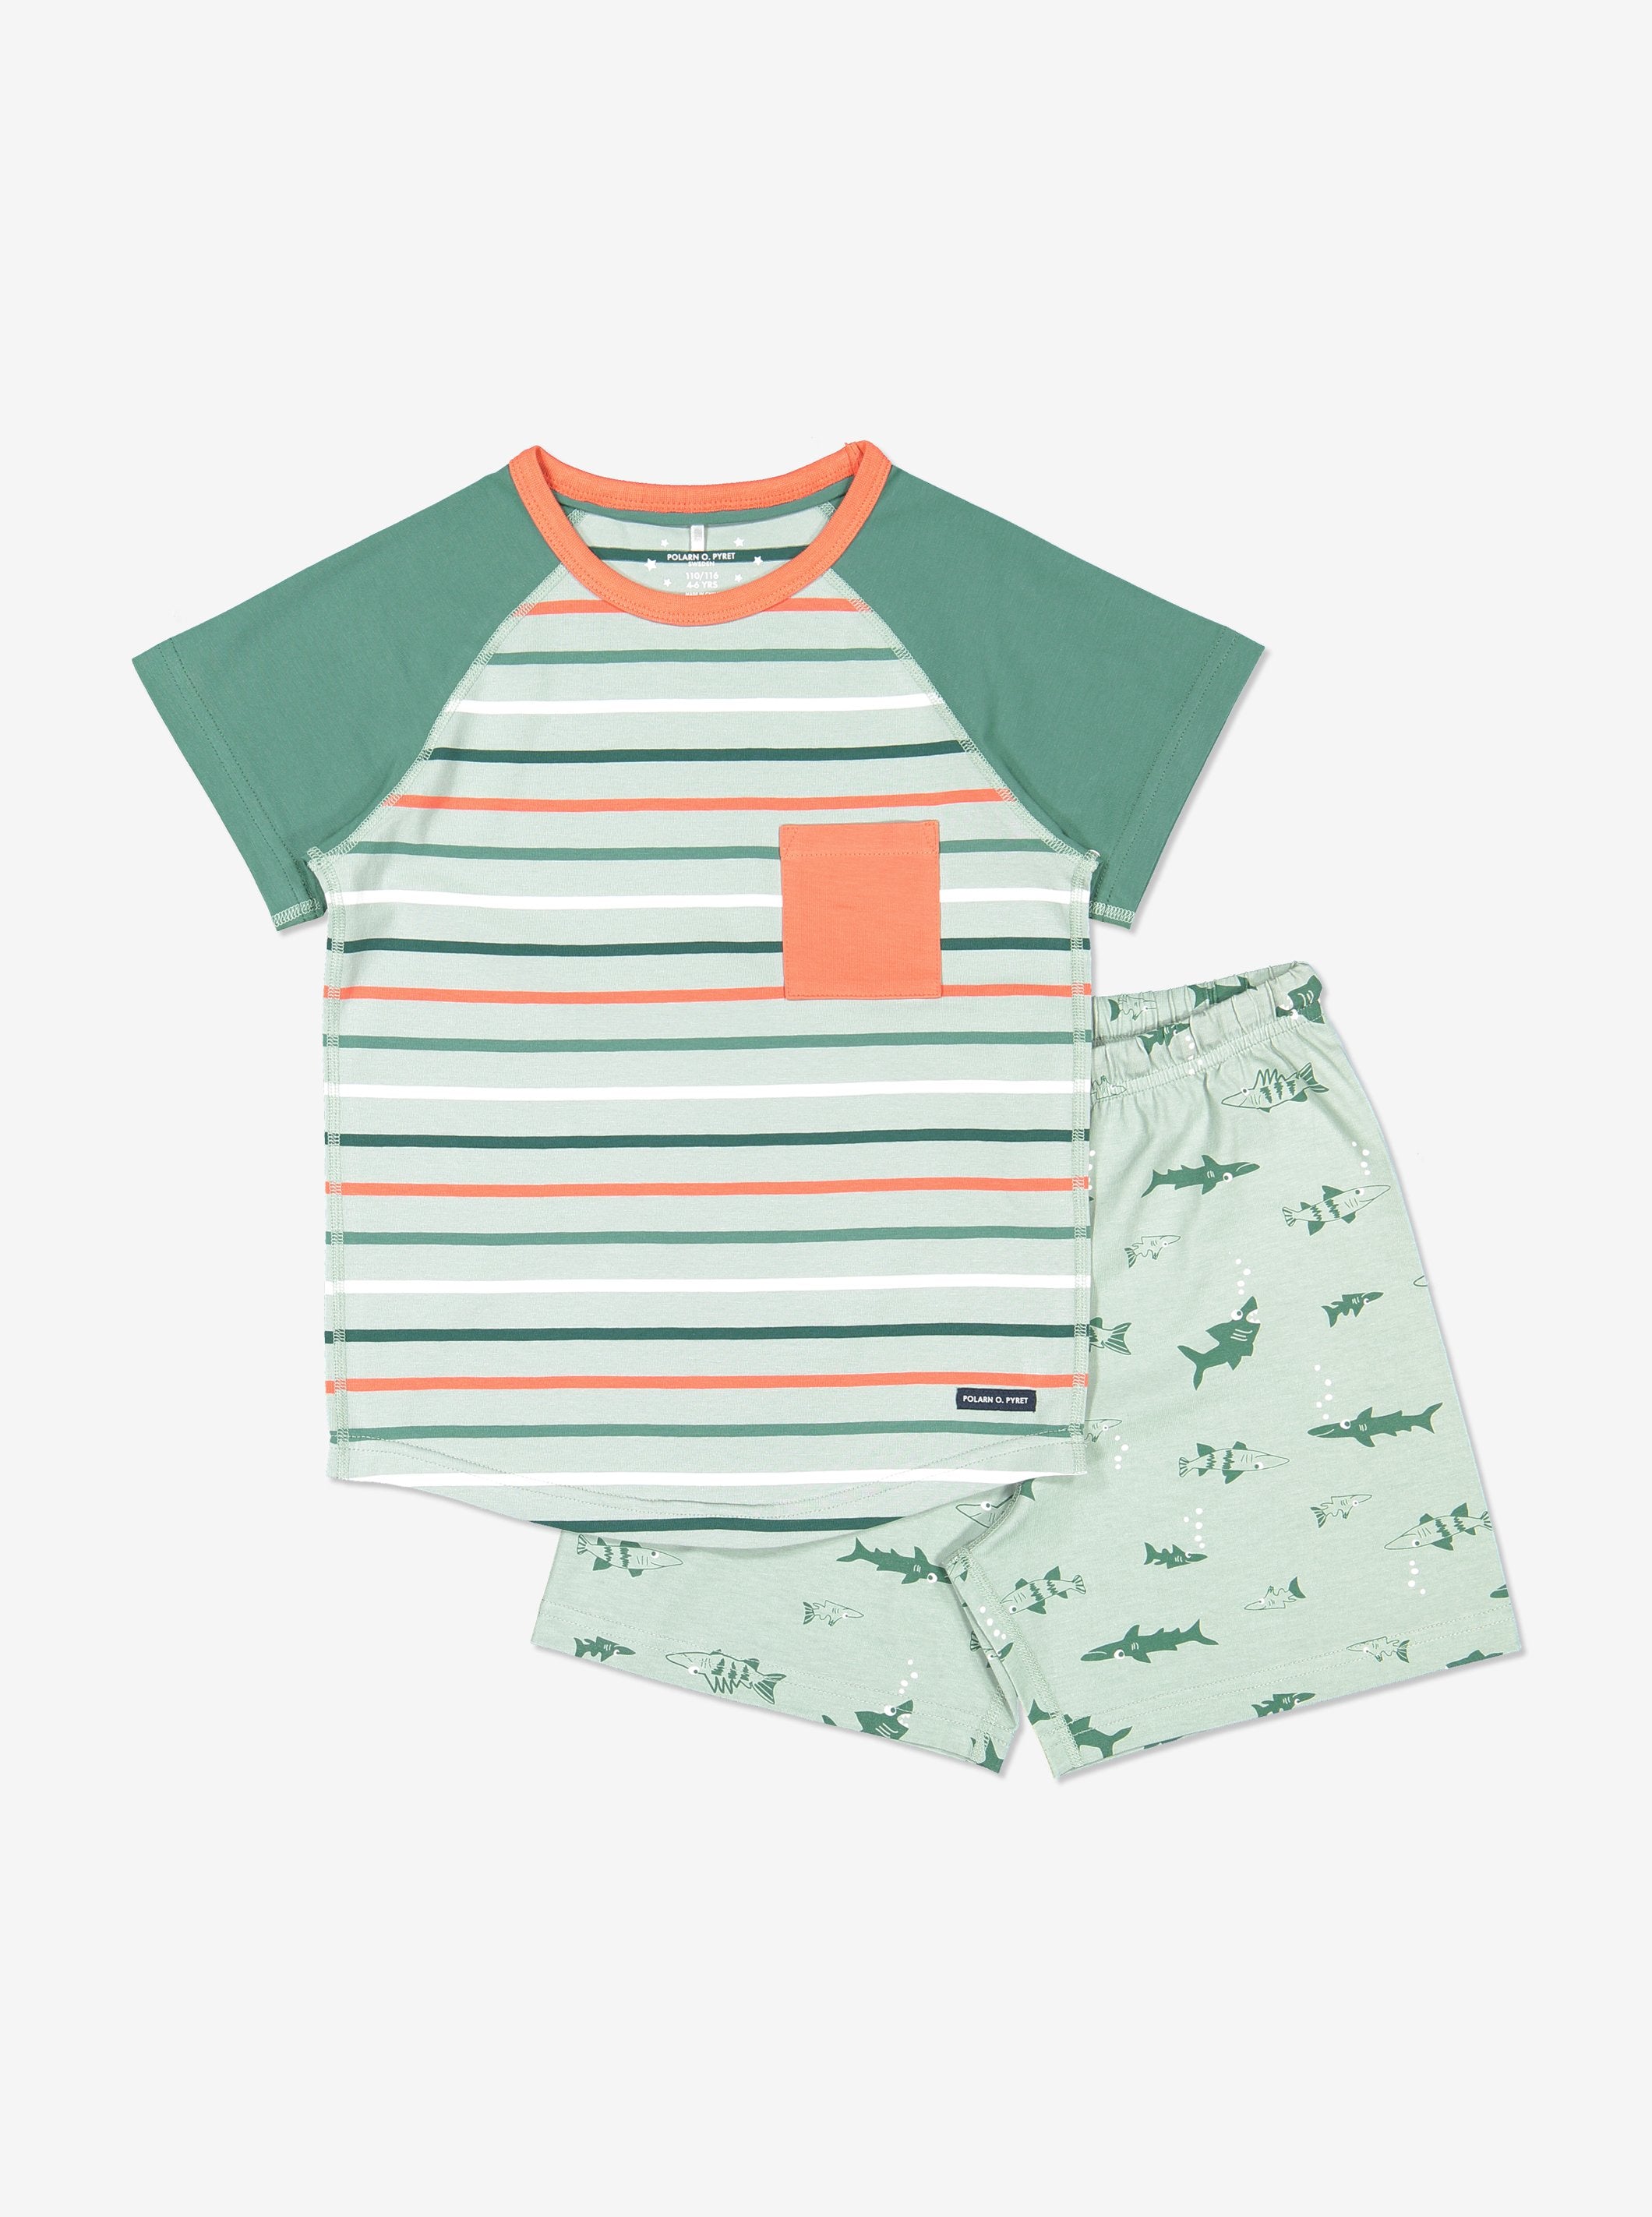 Stripes & Sharks Print Kids Pyjamas